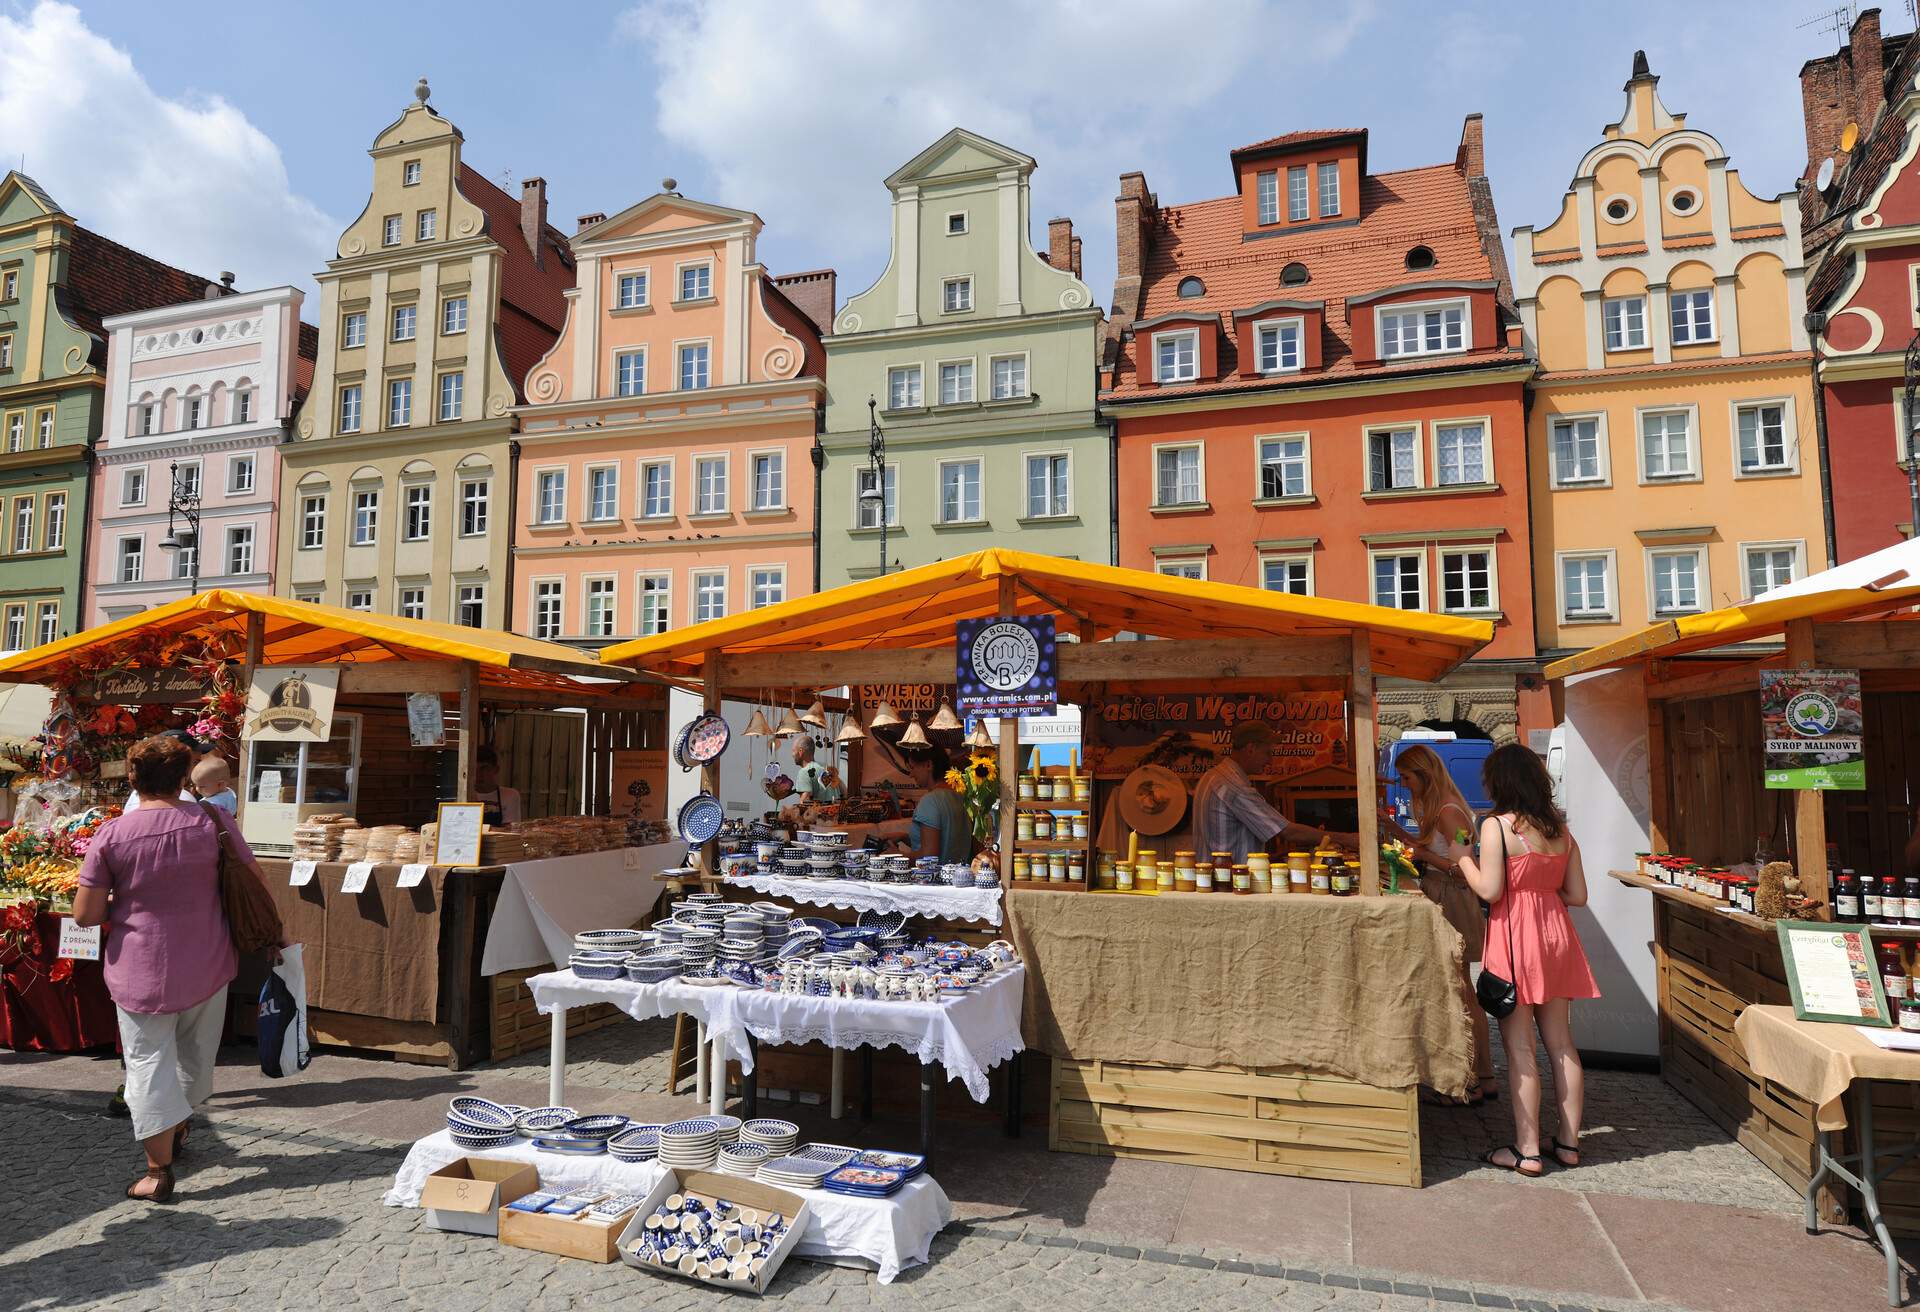 DEST_POLAND_WROCLAW_Market stalls in Salt Square_GettyImages-470787589